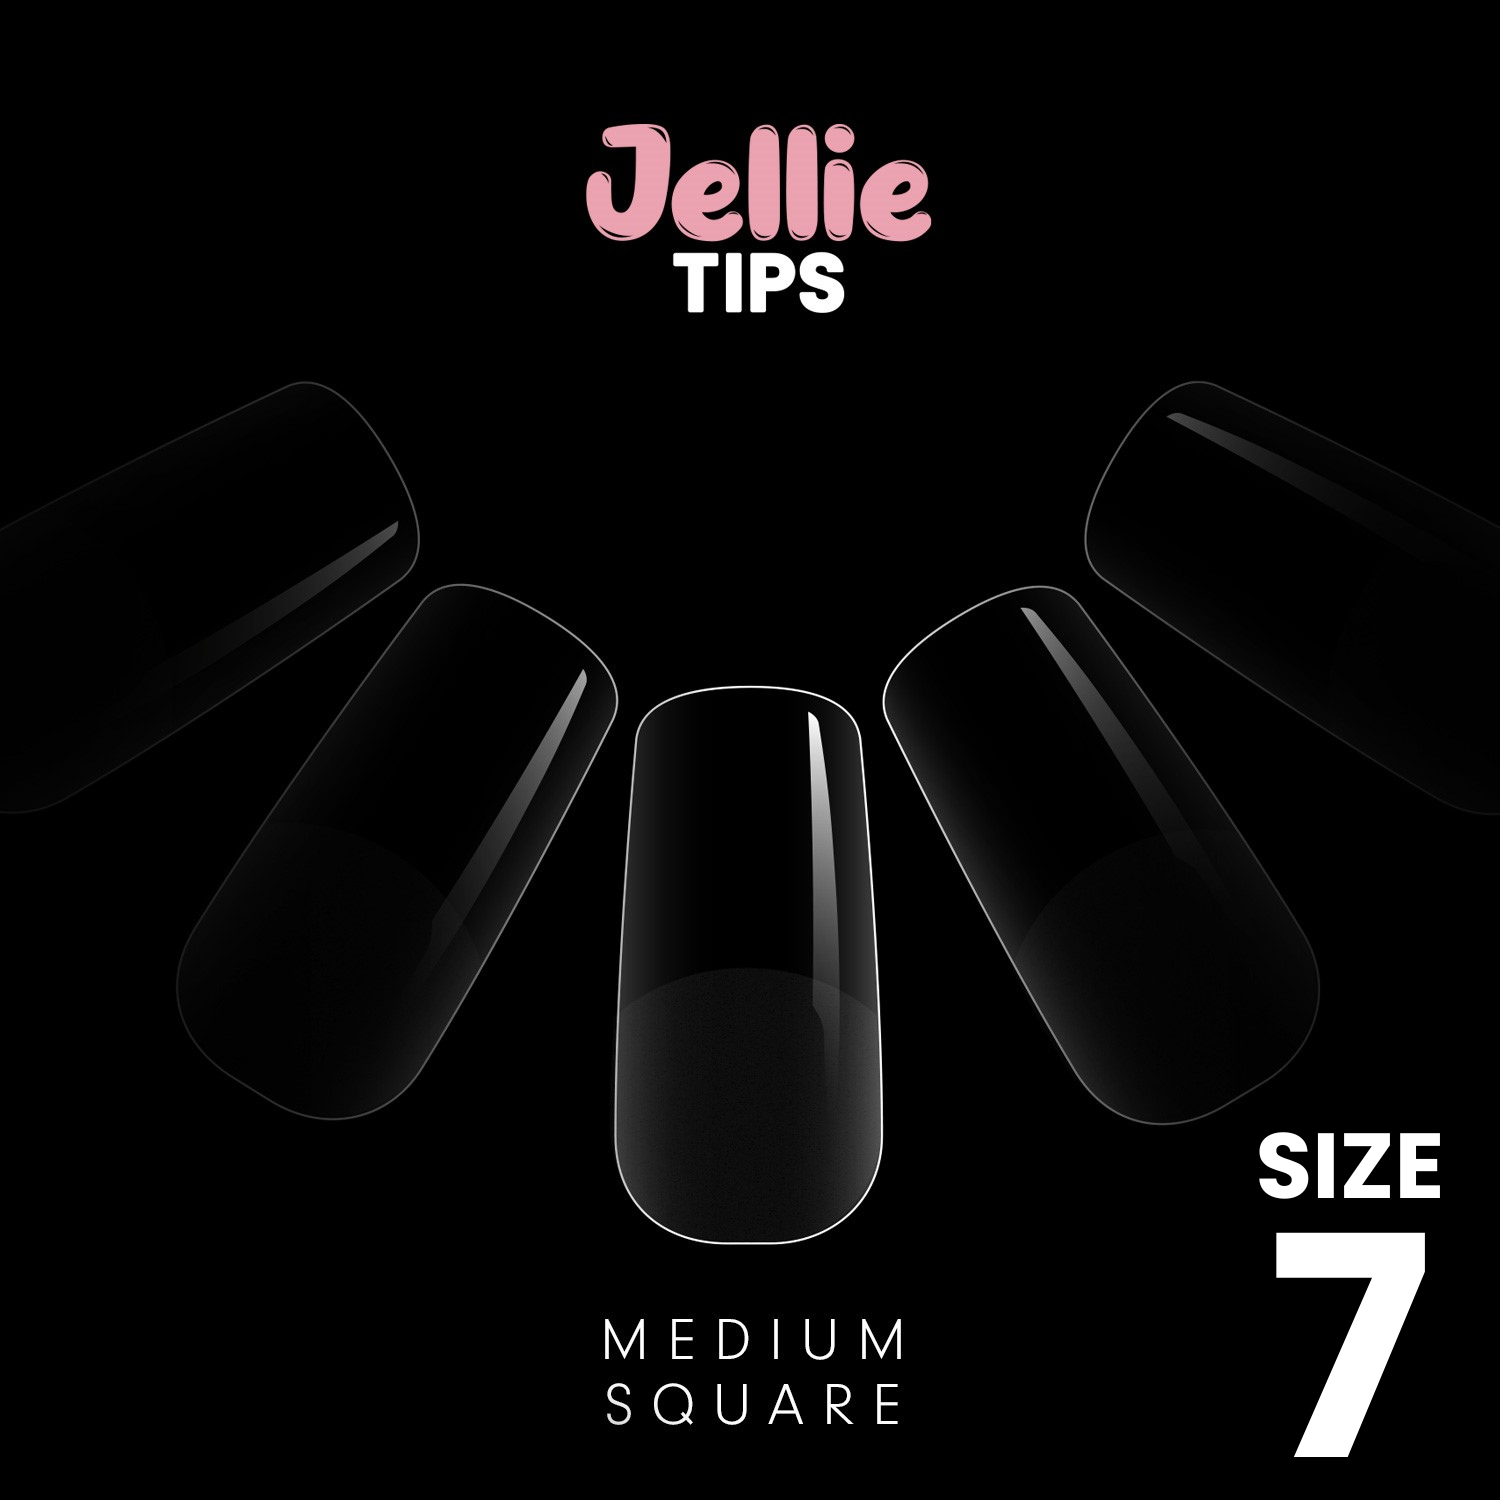 Halo Jellie Nail Tips Medium Square